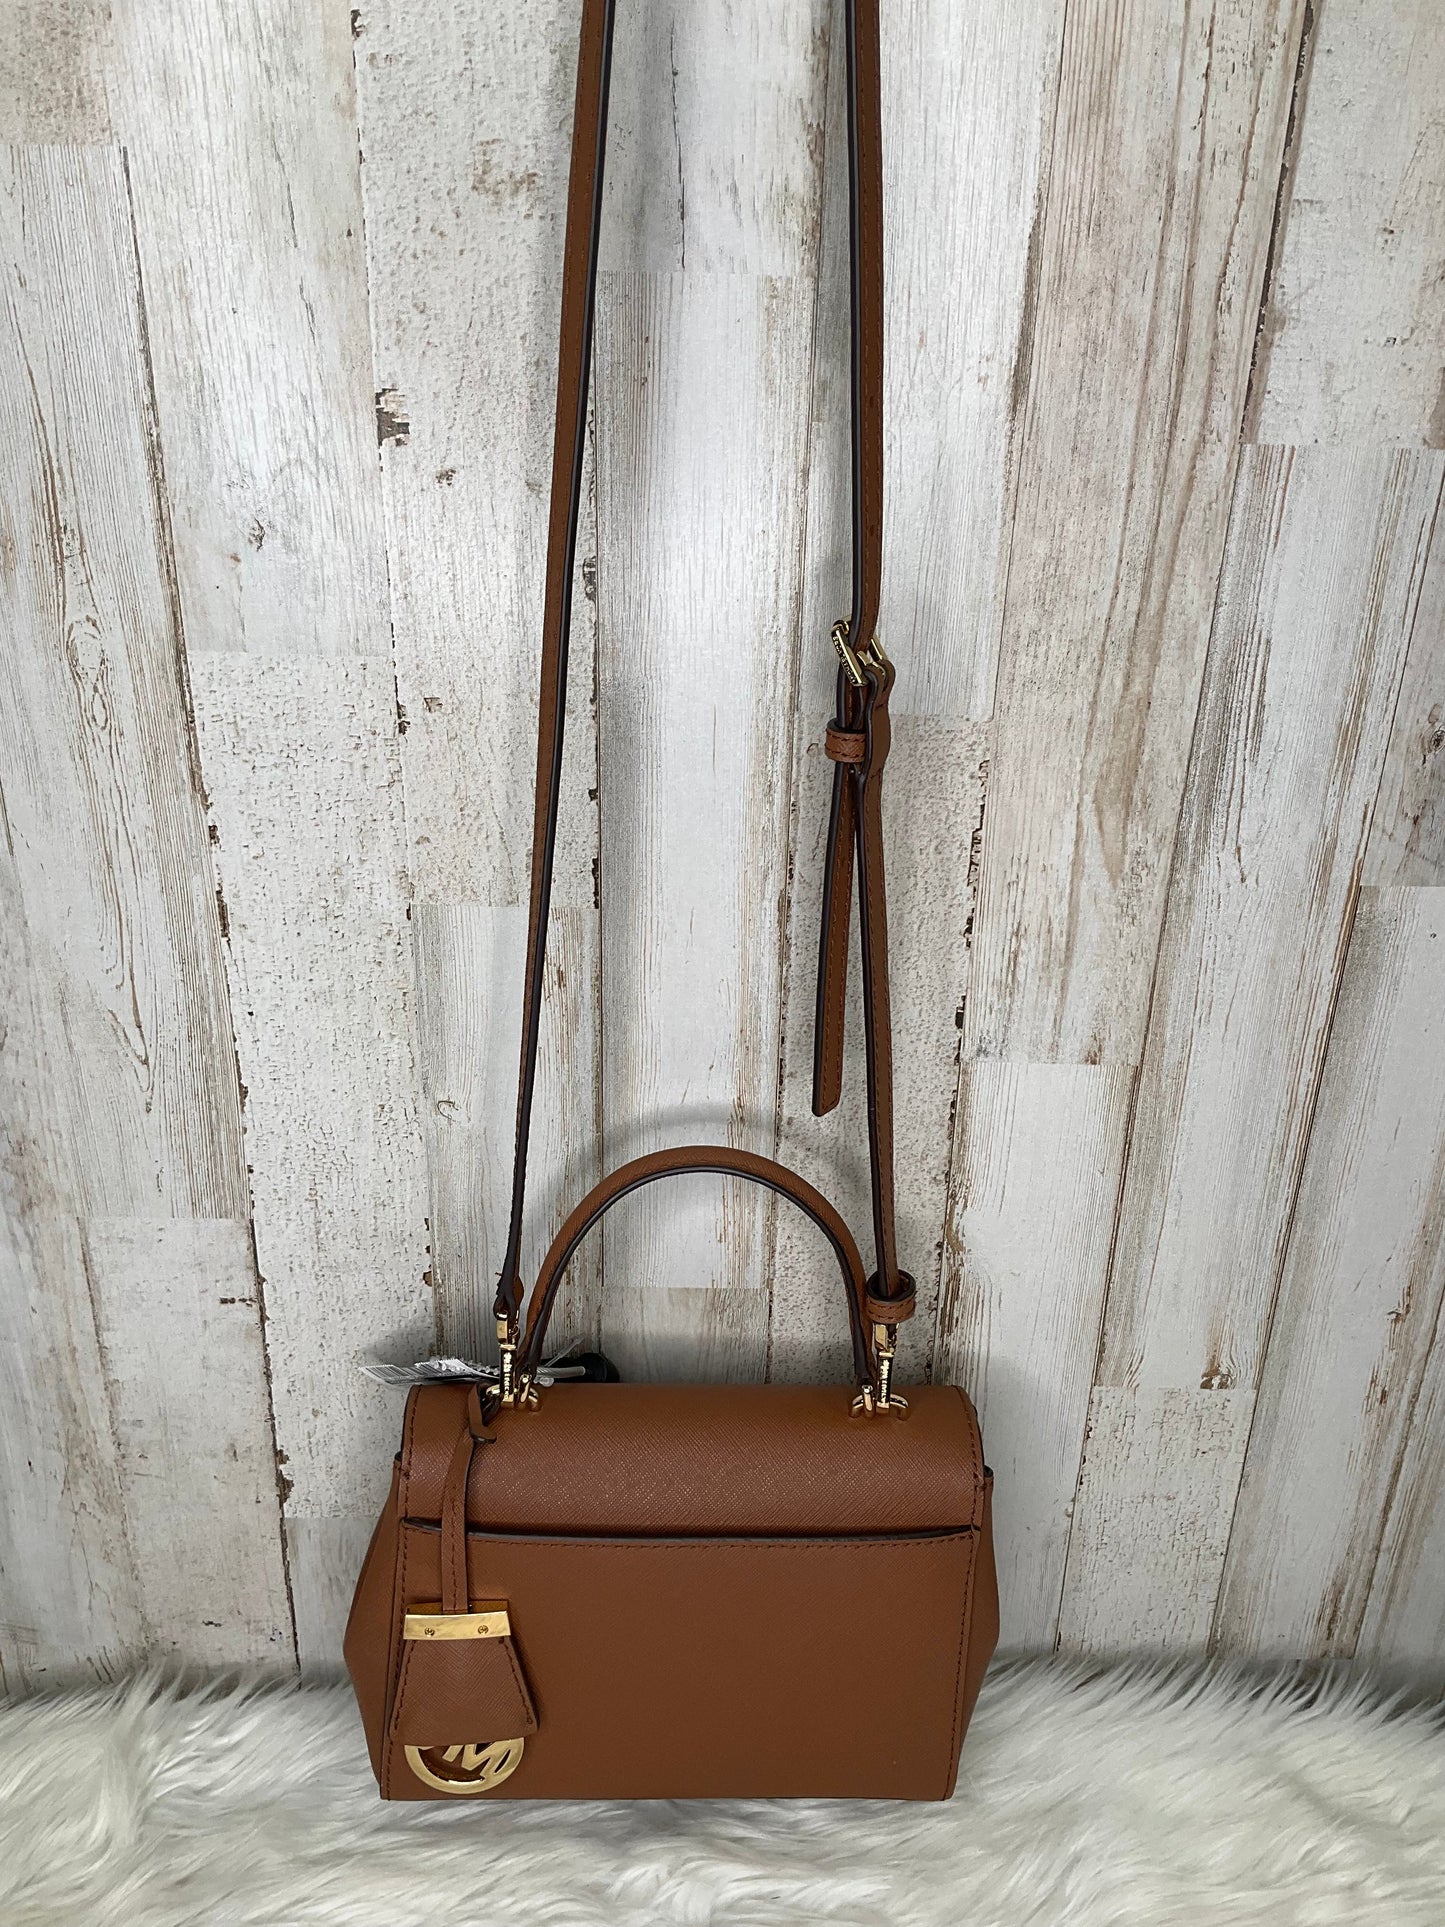 Handbag Luxury Designer Michael Kors, Size Small